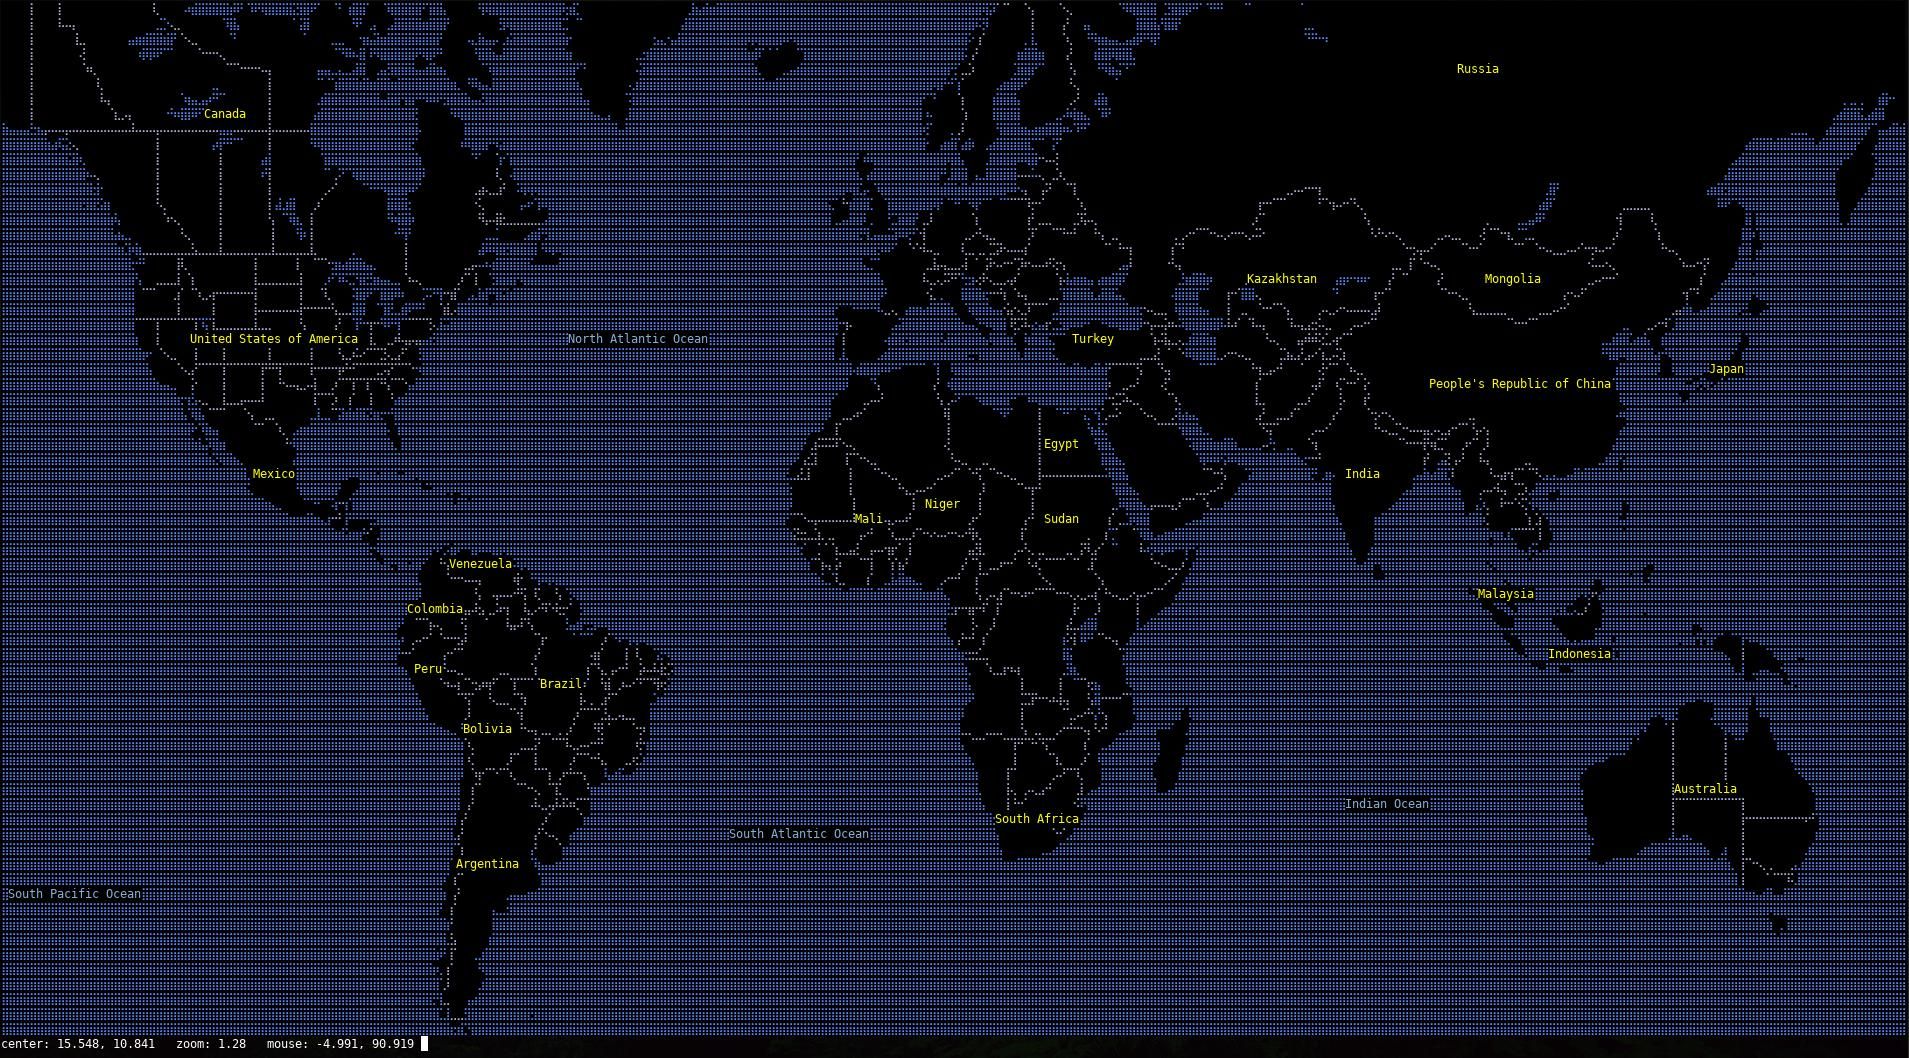 mapscii rendering of the world